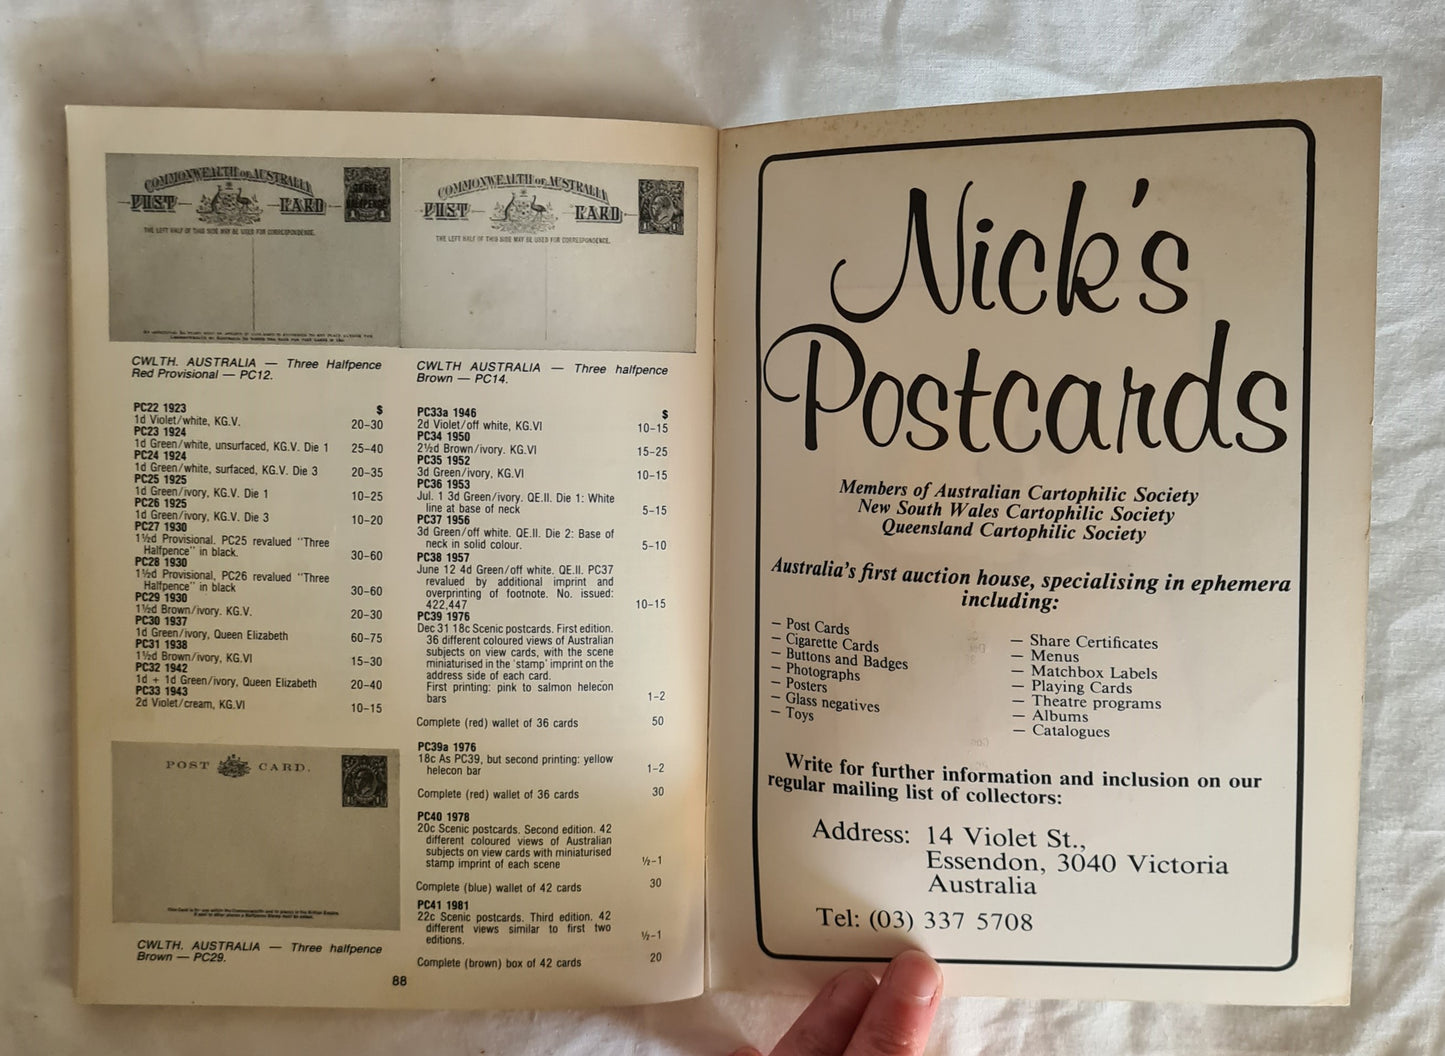 Collecting Australian Postcards by Nick Lj Vukovic